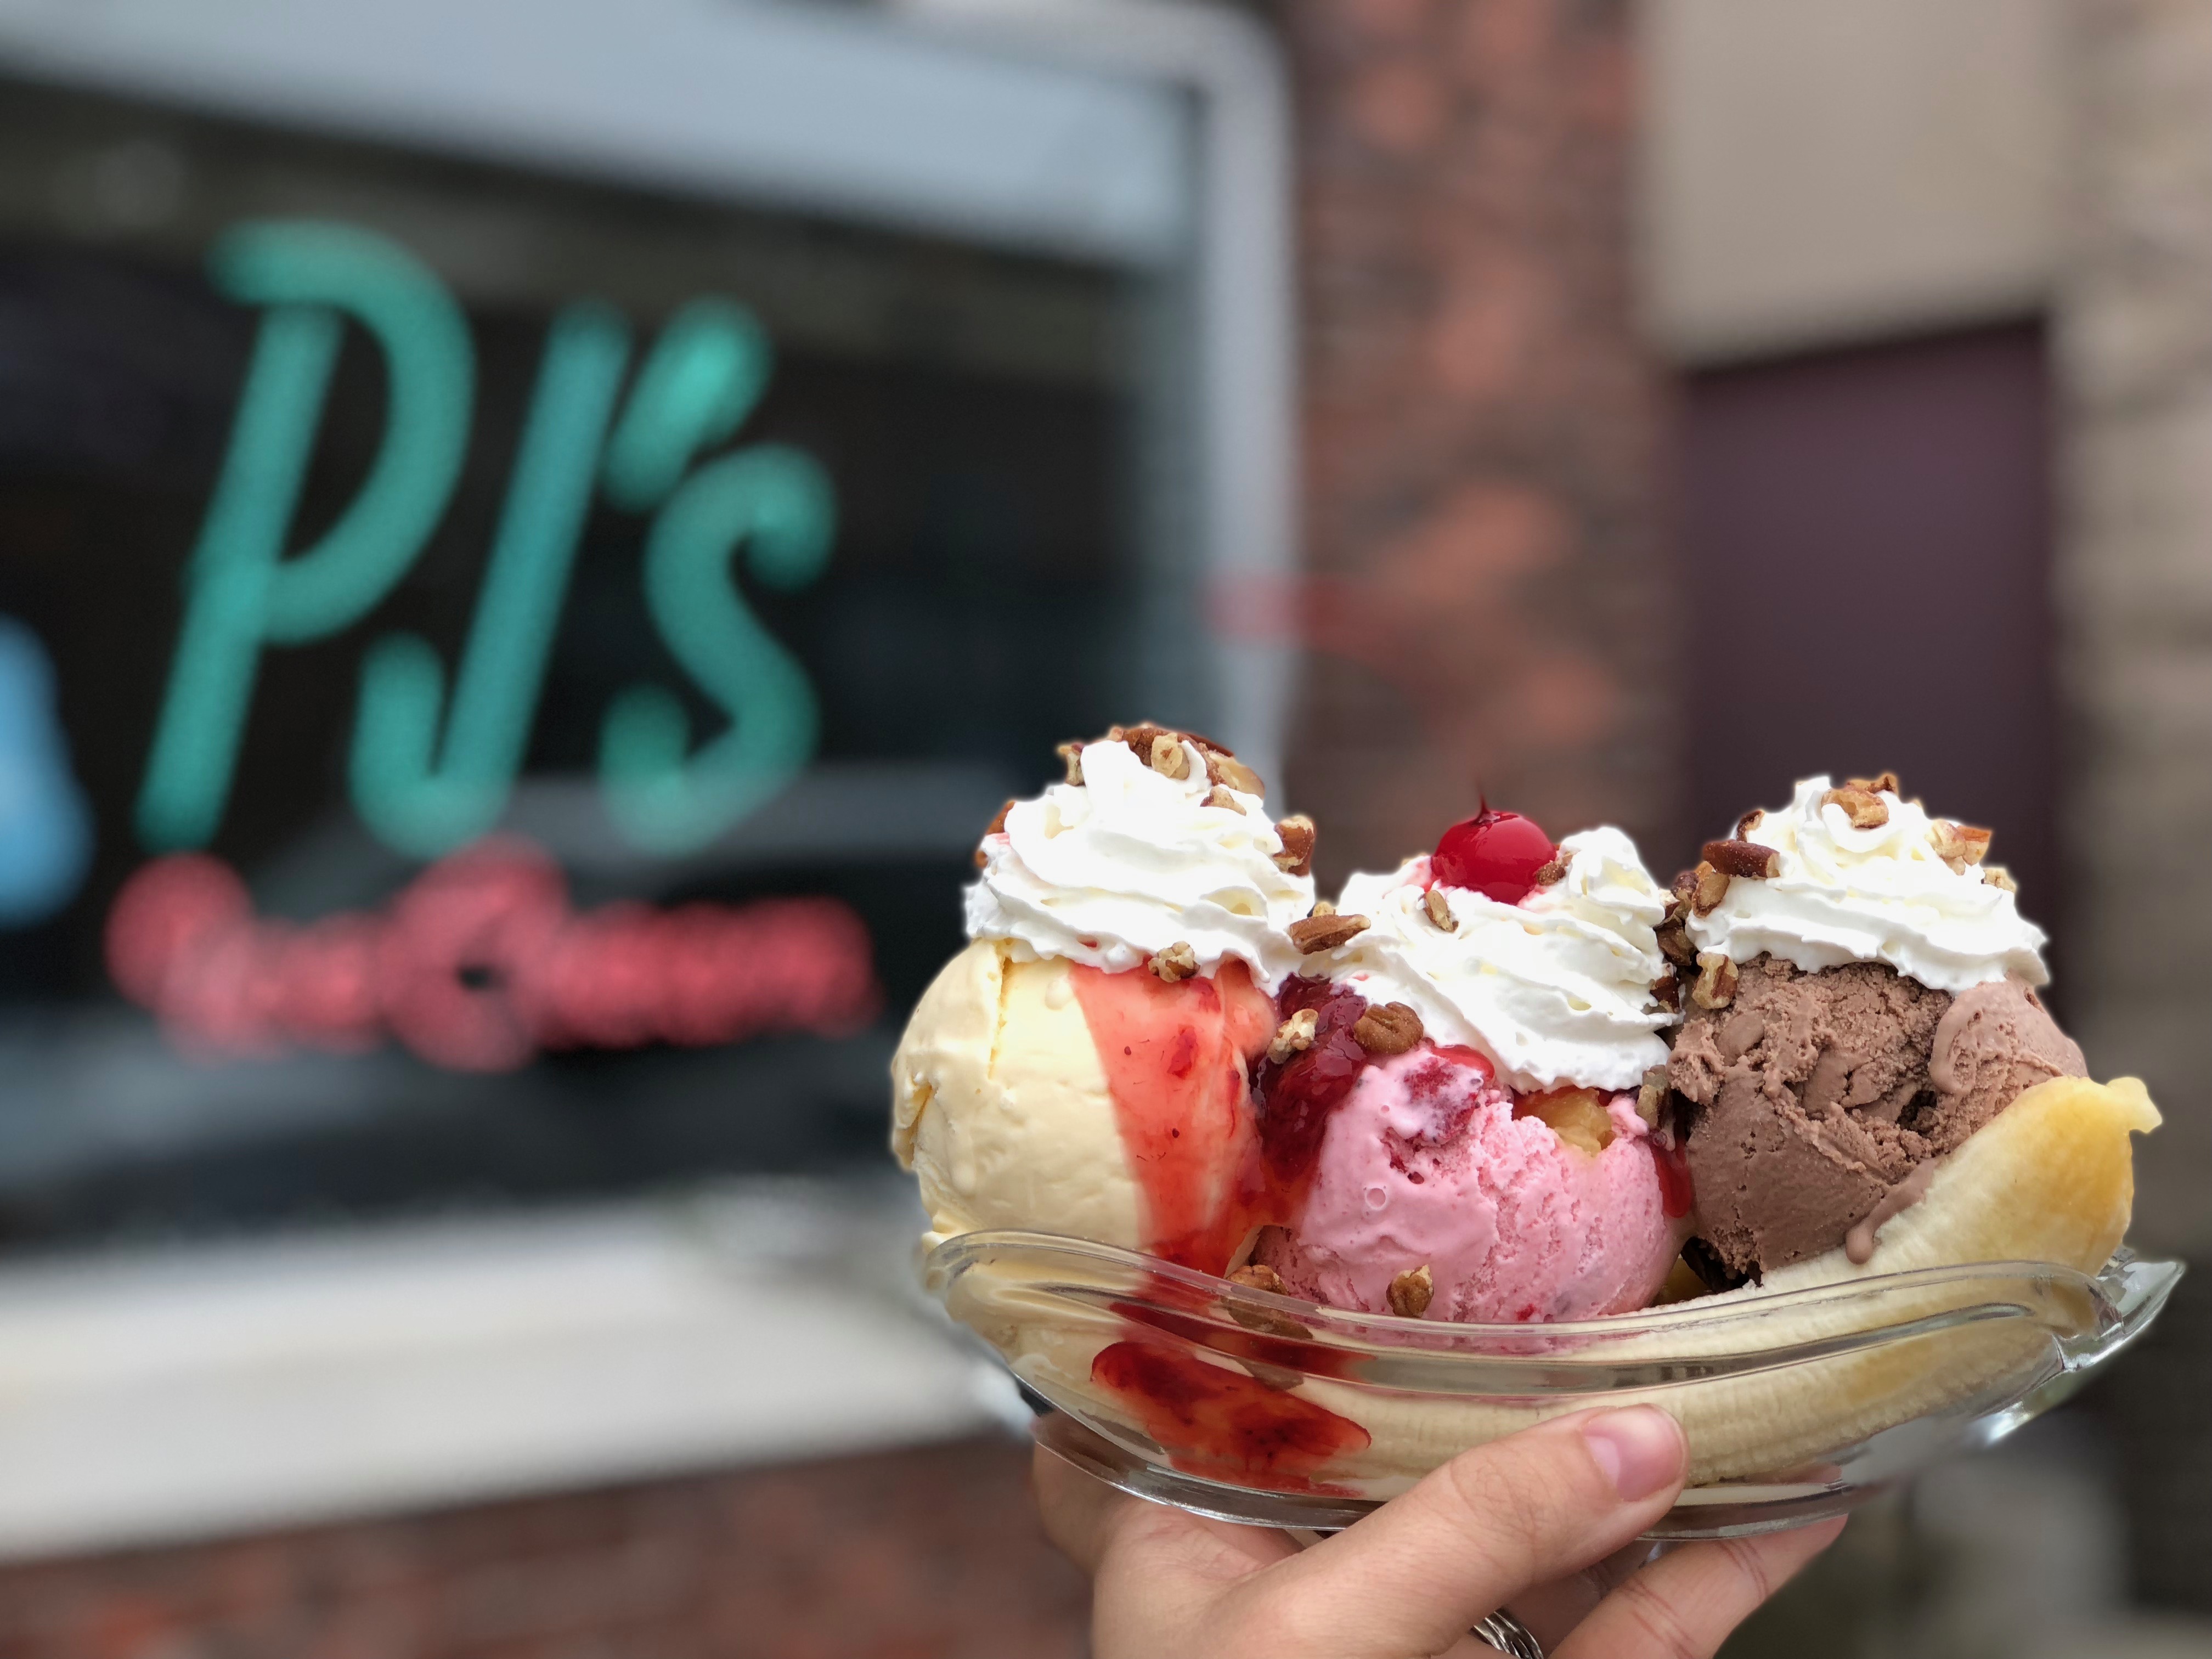 PJ's Ice Cream Parlor, Resort Dining in PA